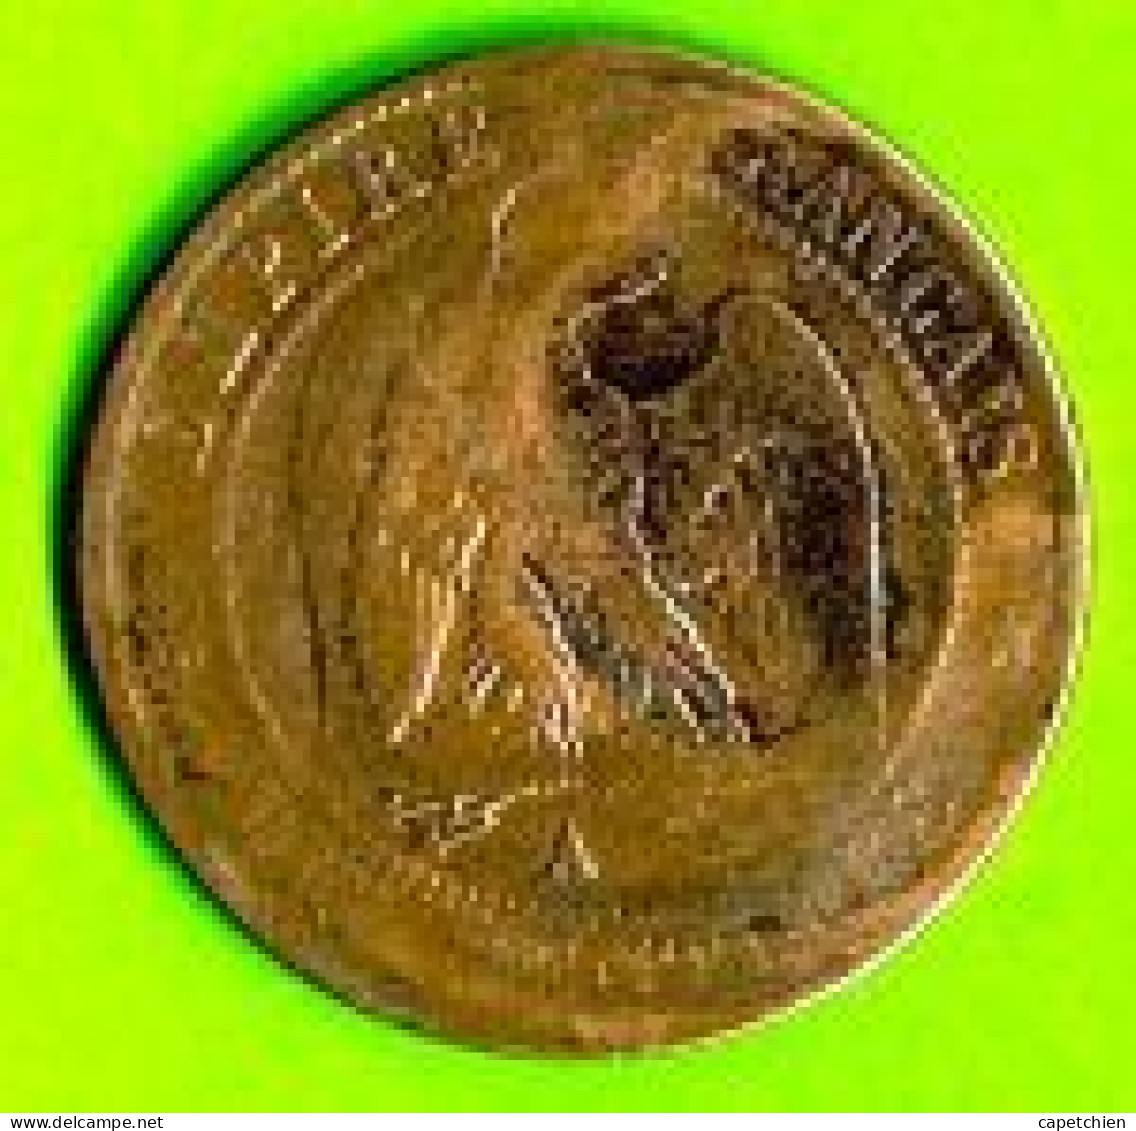 FRANCE / NAPOLEON III / 10 CENTIMES / 1865 A-PARIS - 10 Centimes